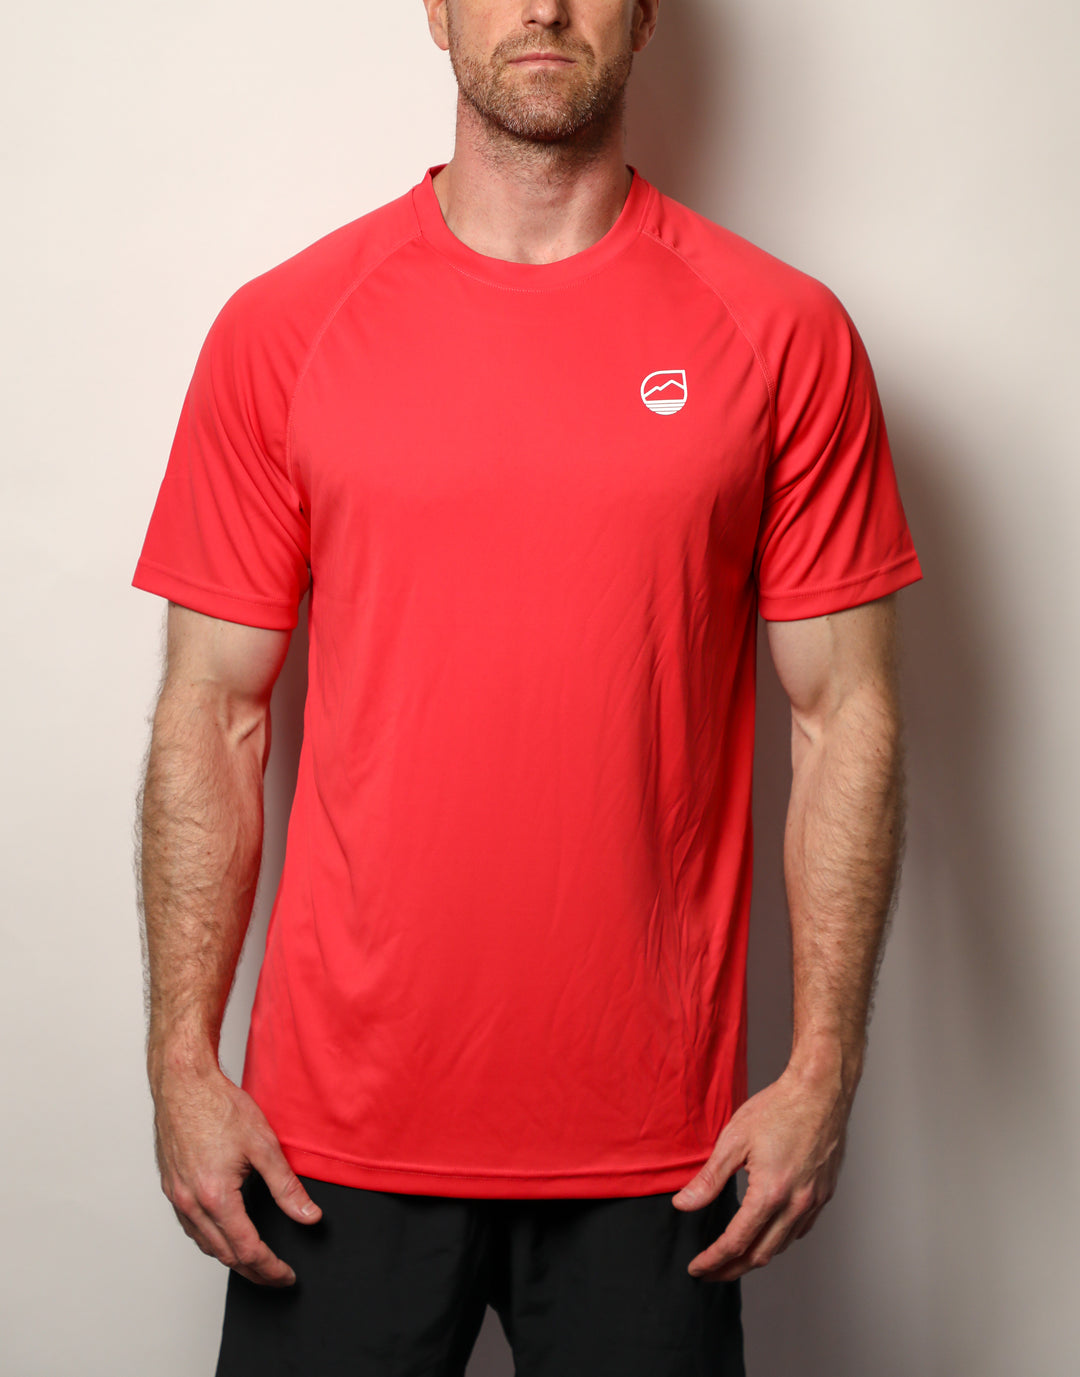 Men's Shoreline Lightweight Sun Shirt UPF 50+ - Rayward Apparel